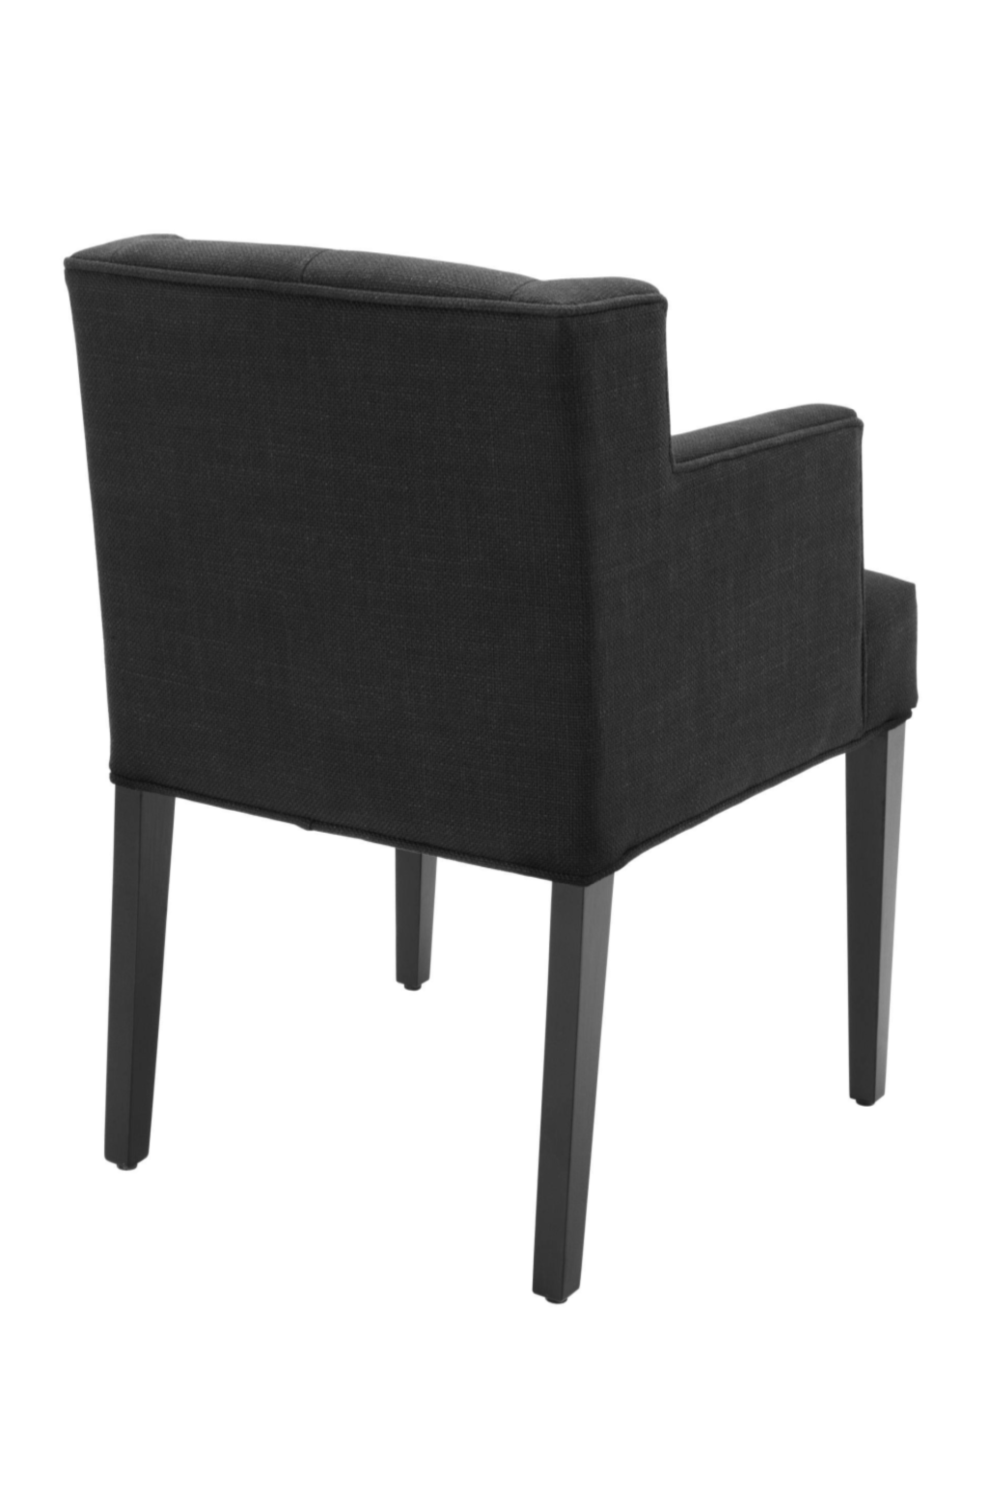 Black Dining Chair | Eichholtz Boca Raton | #1 Eichholtz Retailer